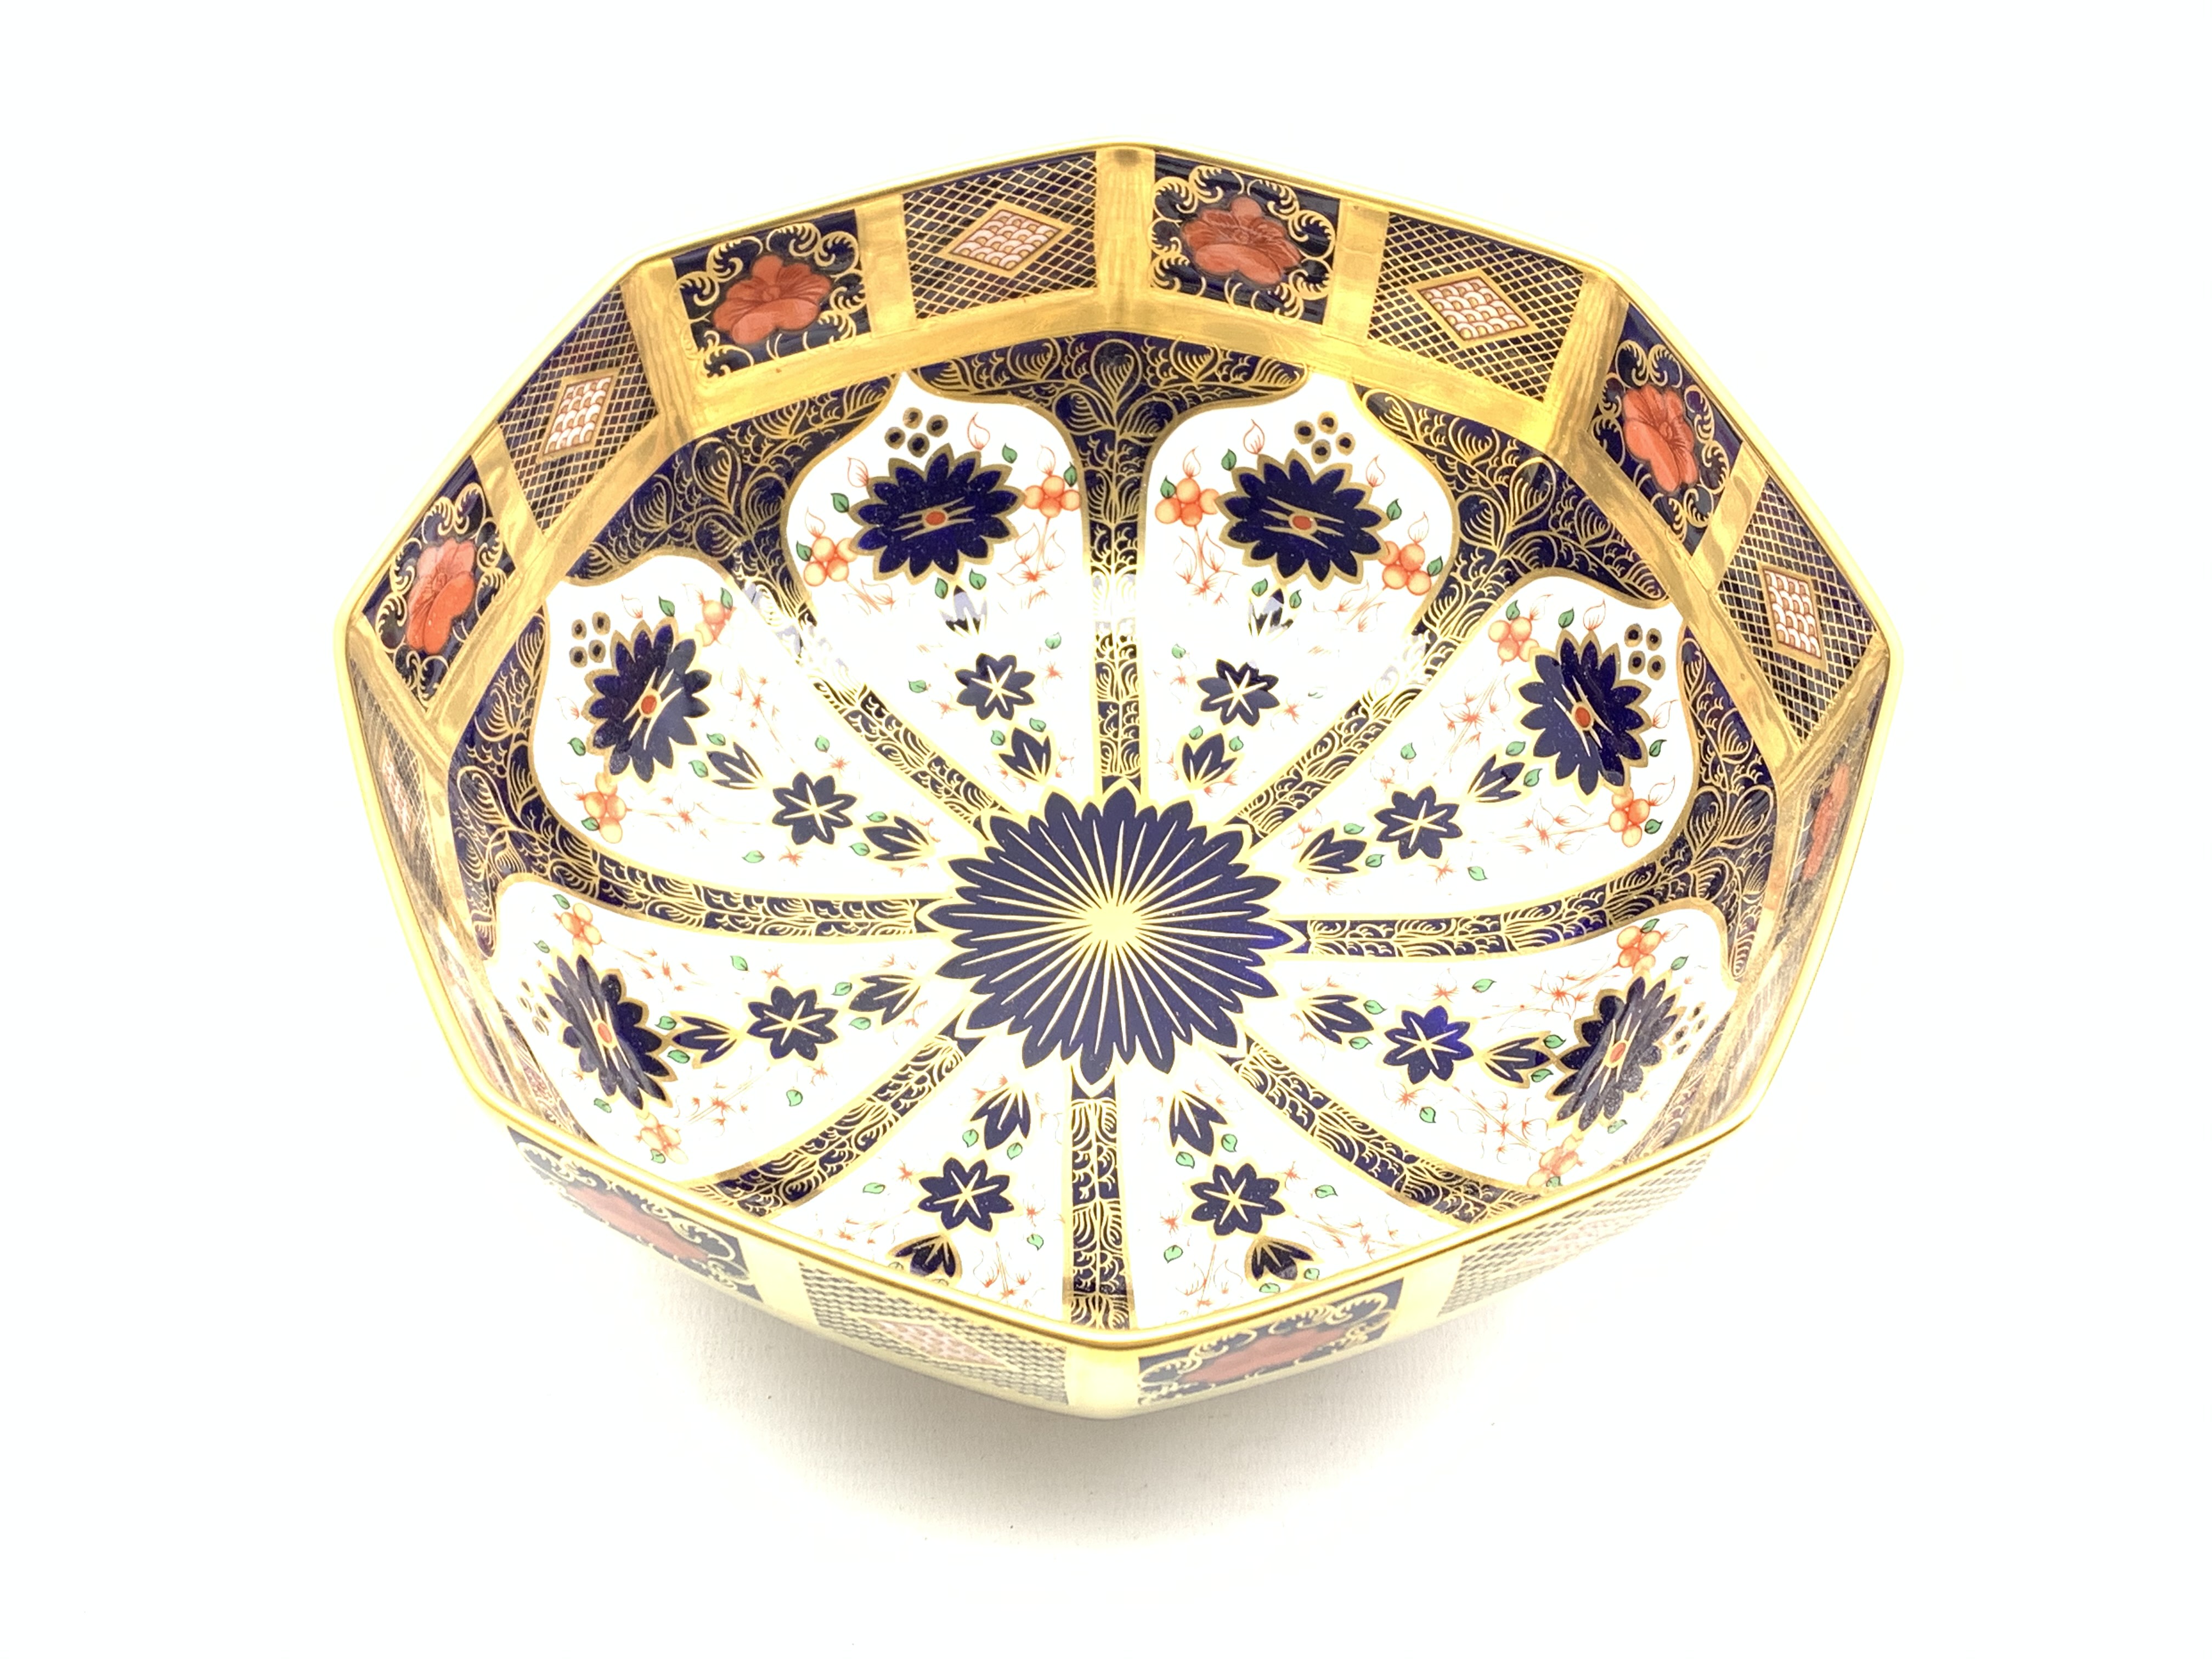 Royal Crown Derby Imari 1128 pattern bowl, diameter 21cm, - Image 2 of 3